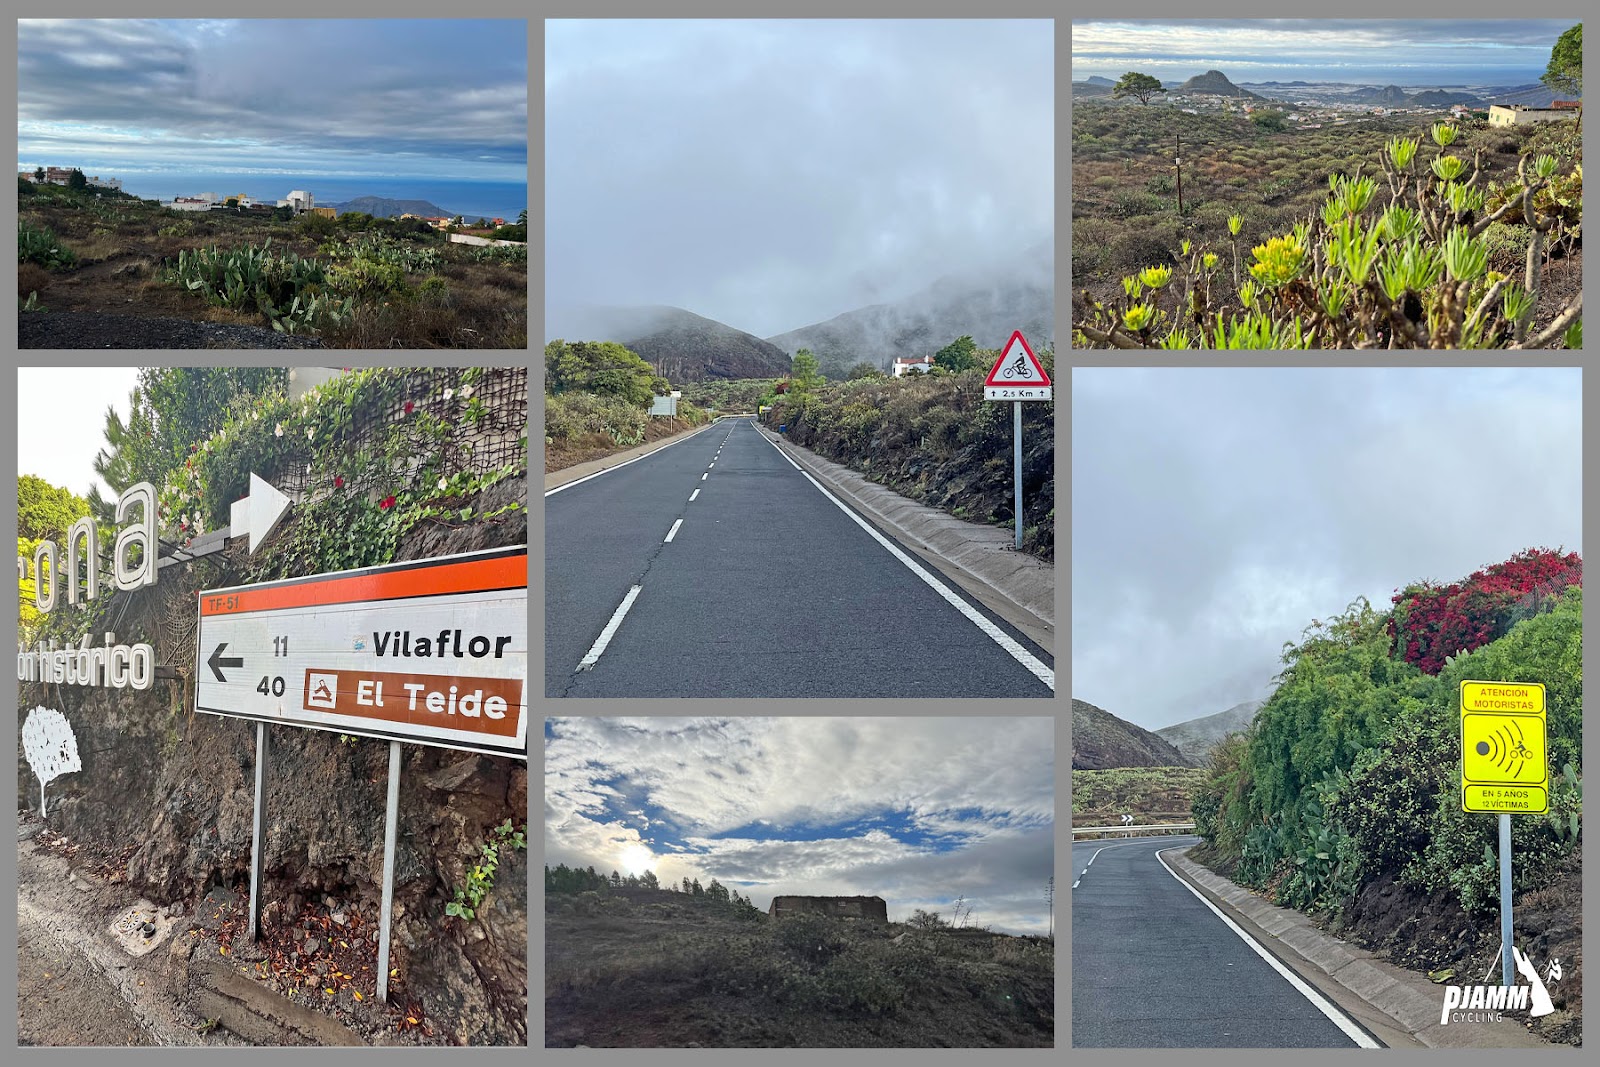 photo collage shows two-lane highway roadway, signs for Vilaflor, El Teide